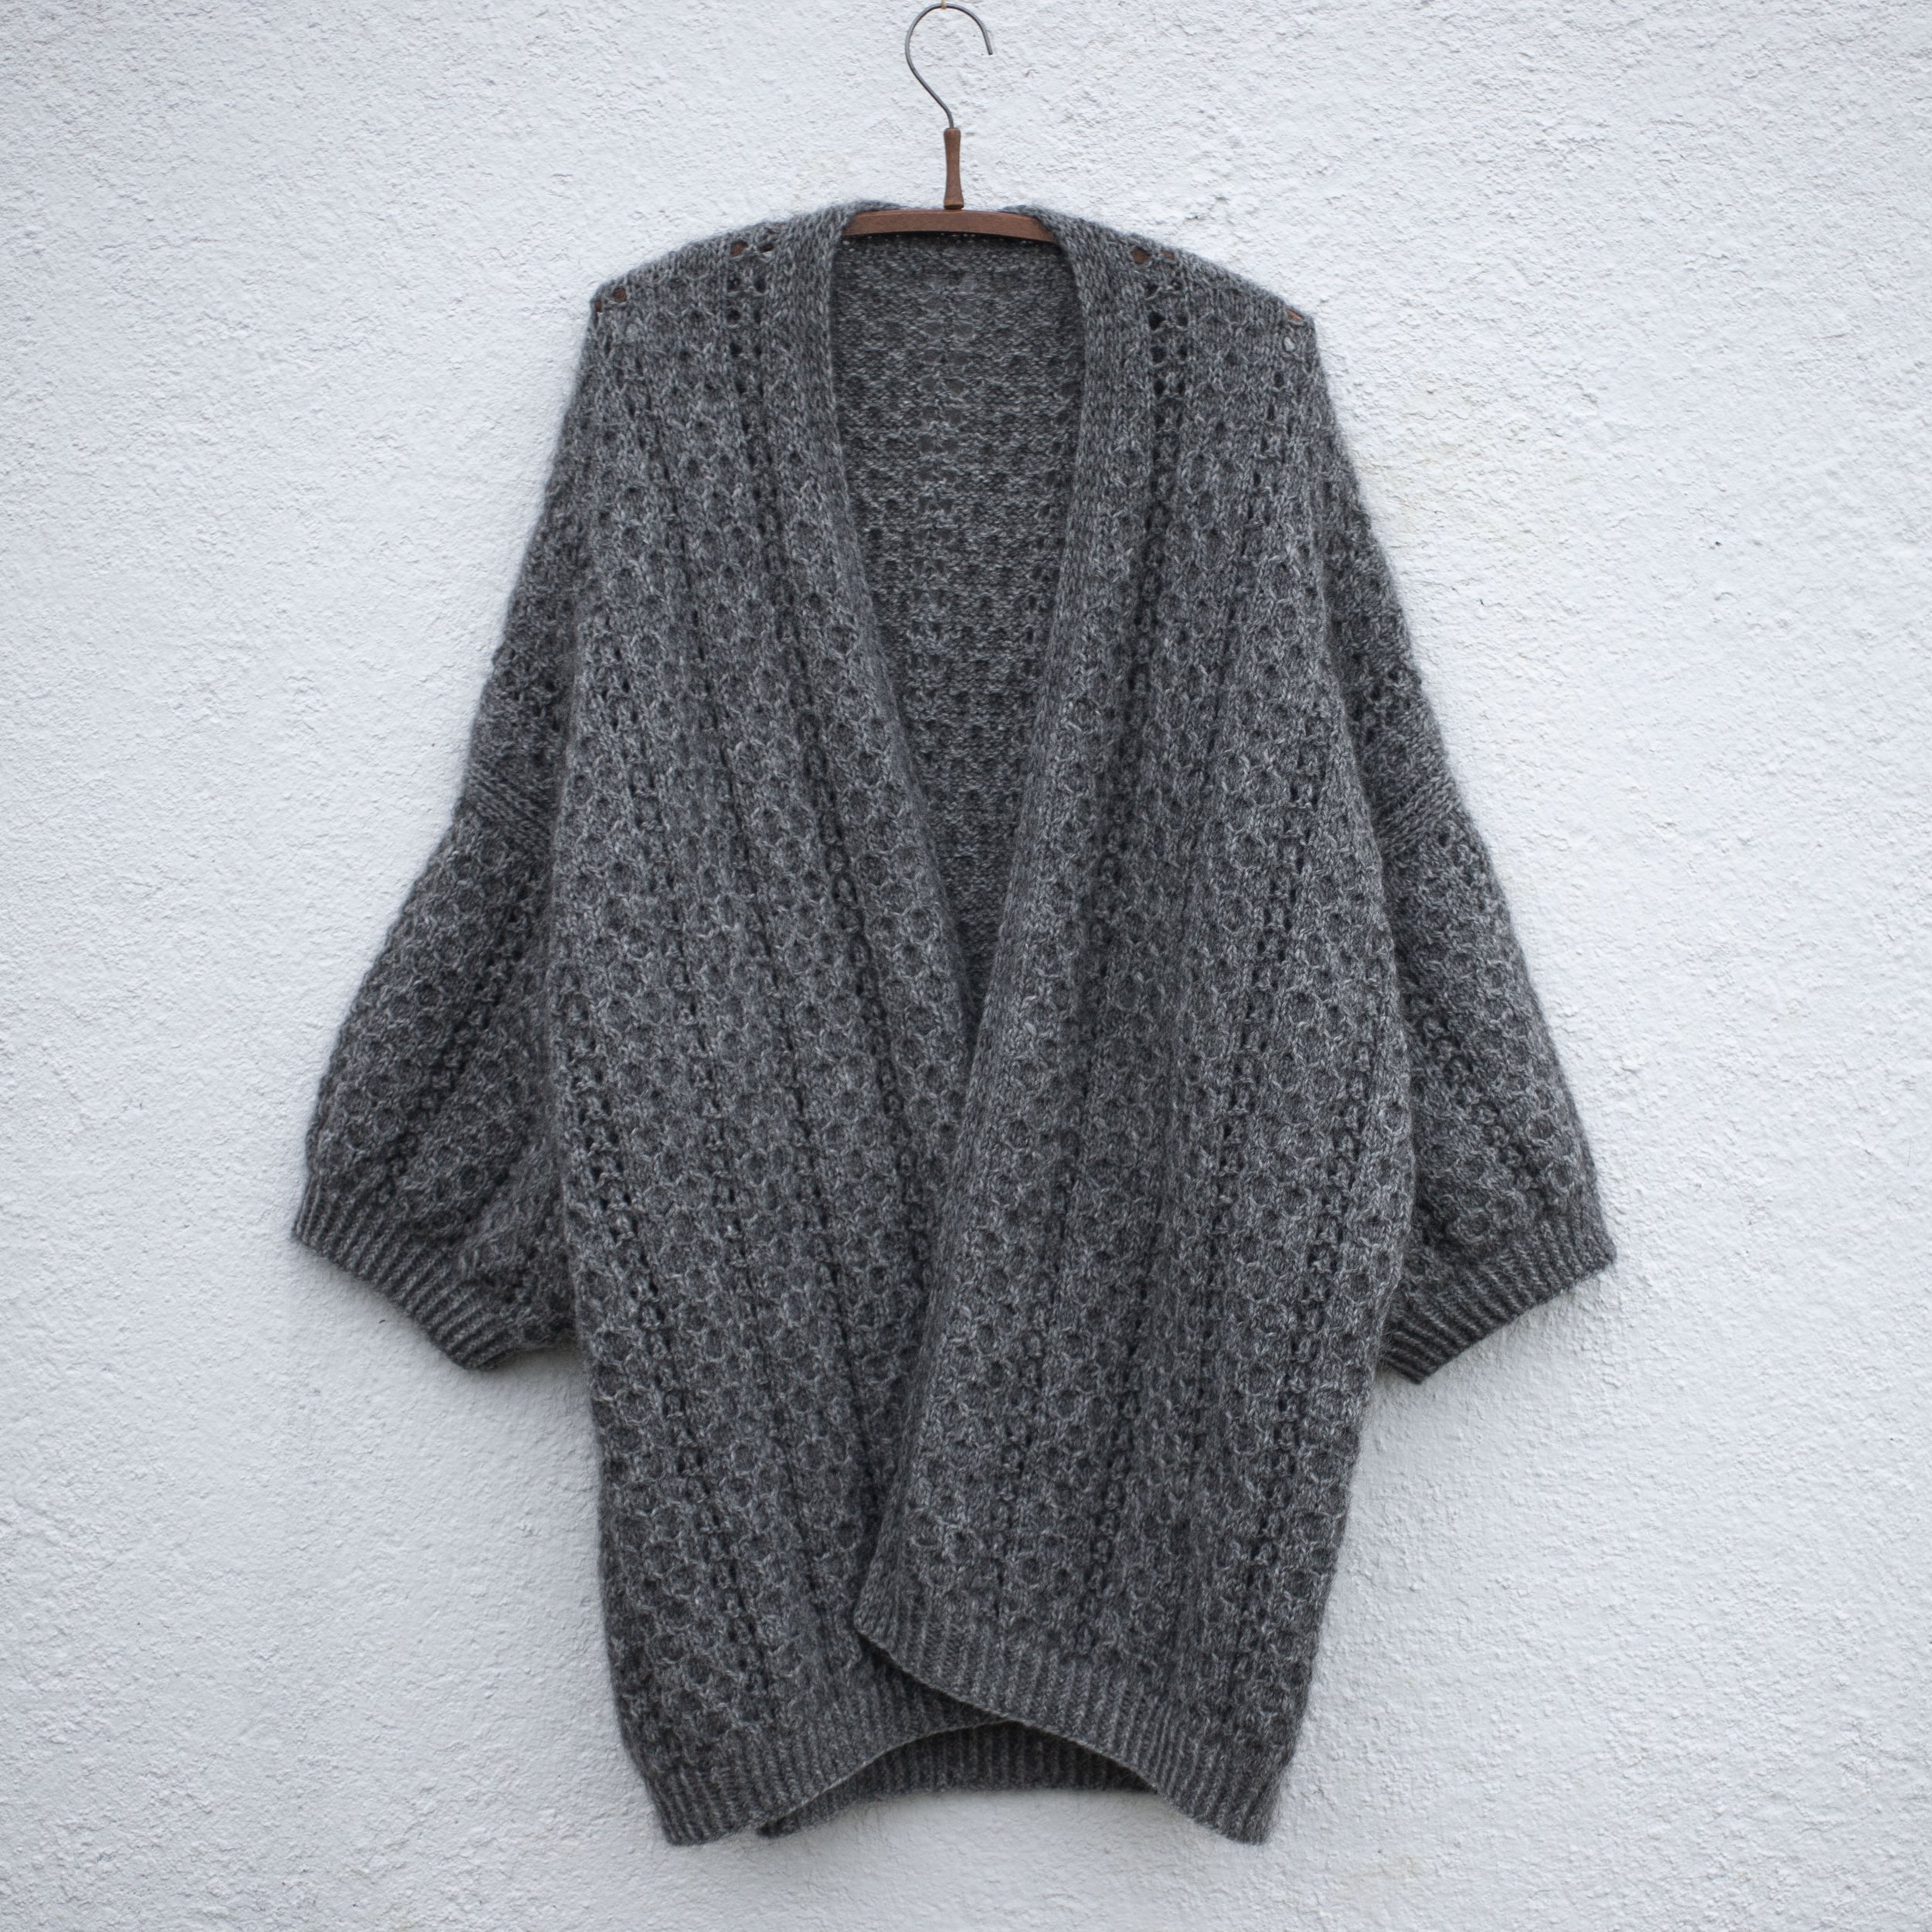 Comma Cocoon, knitting pattern in English. — Anne Ventzel